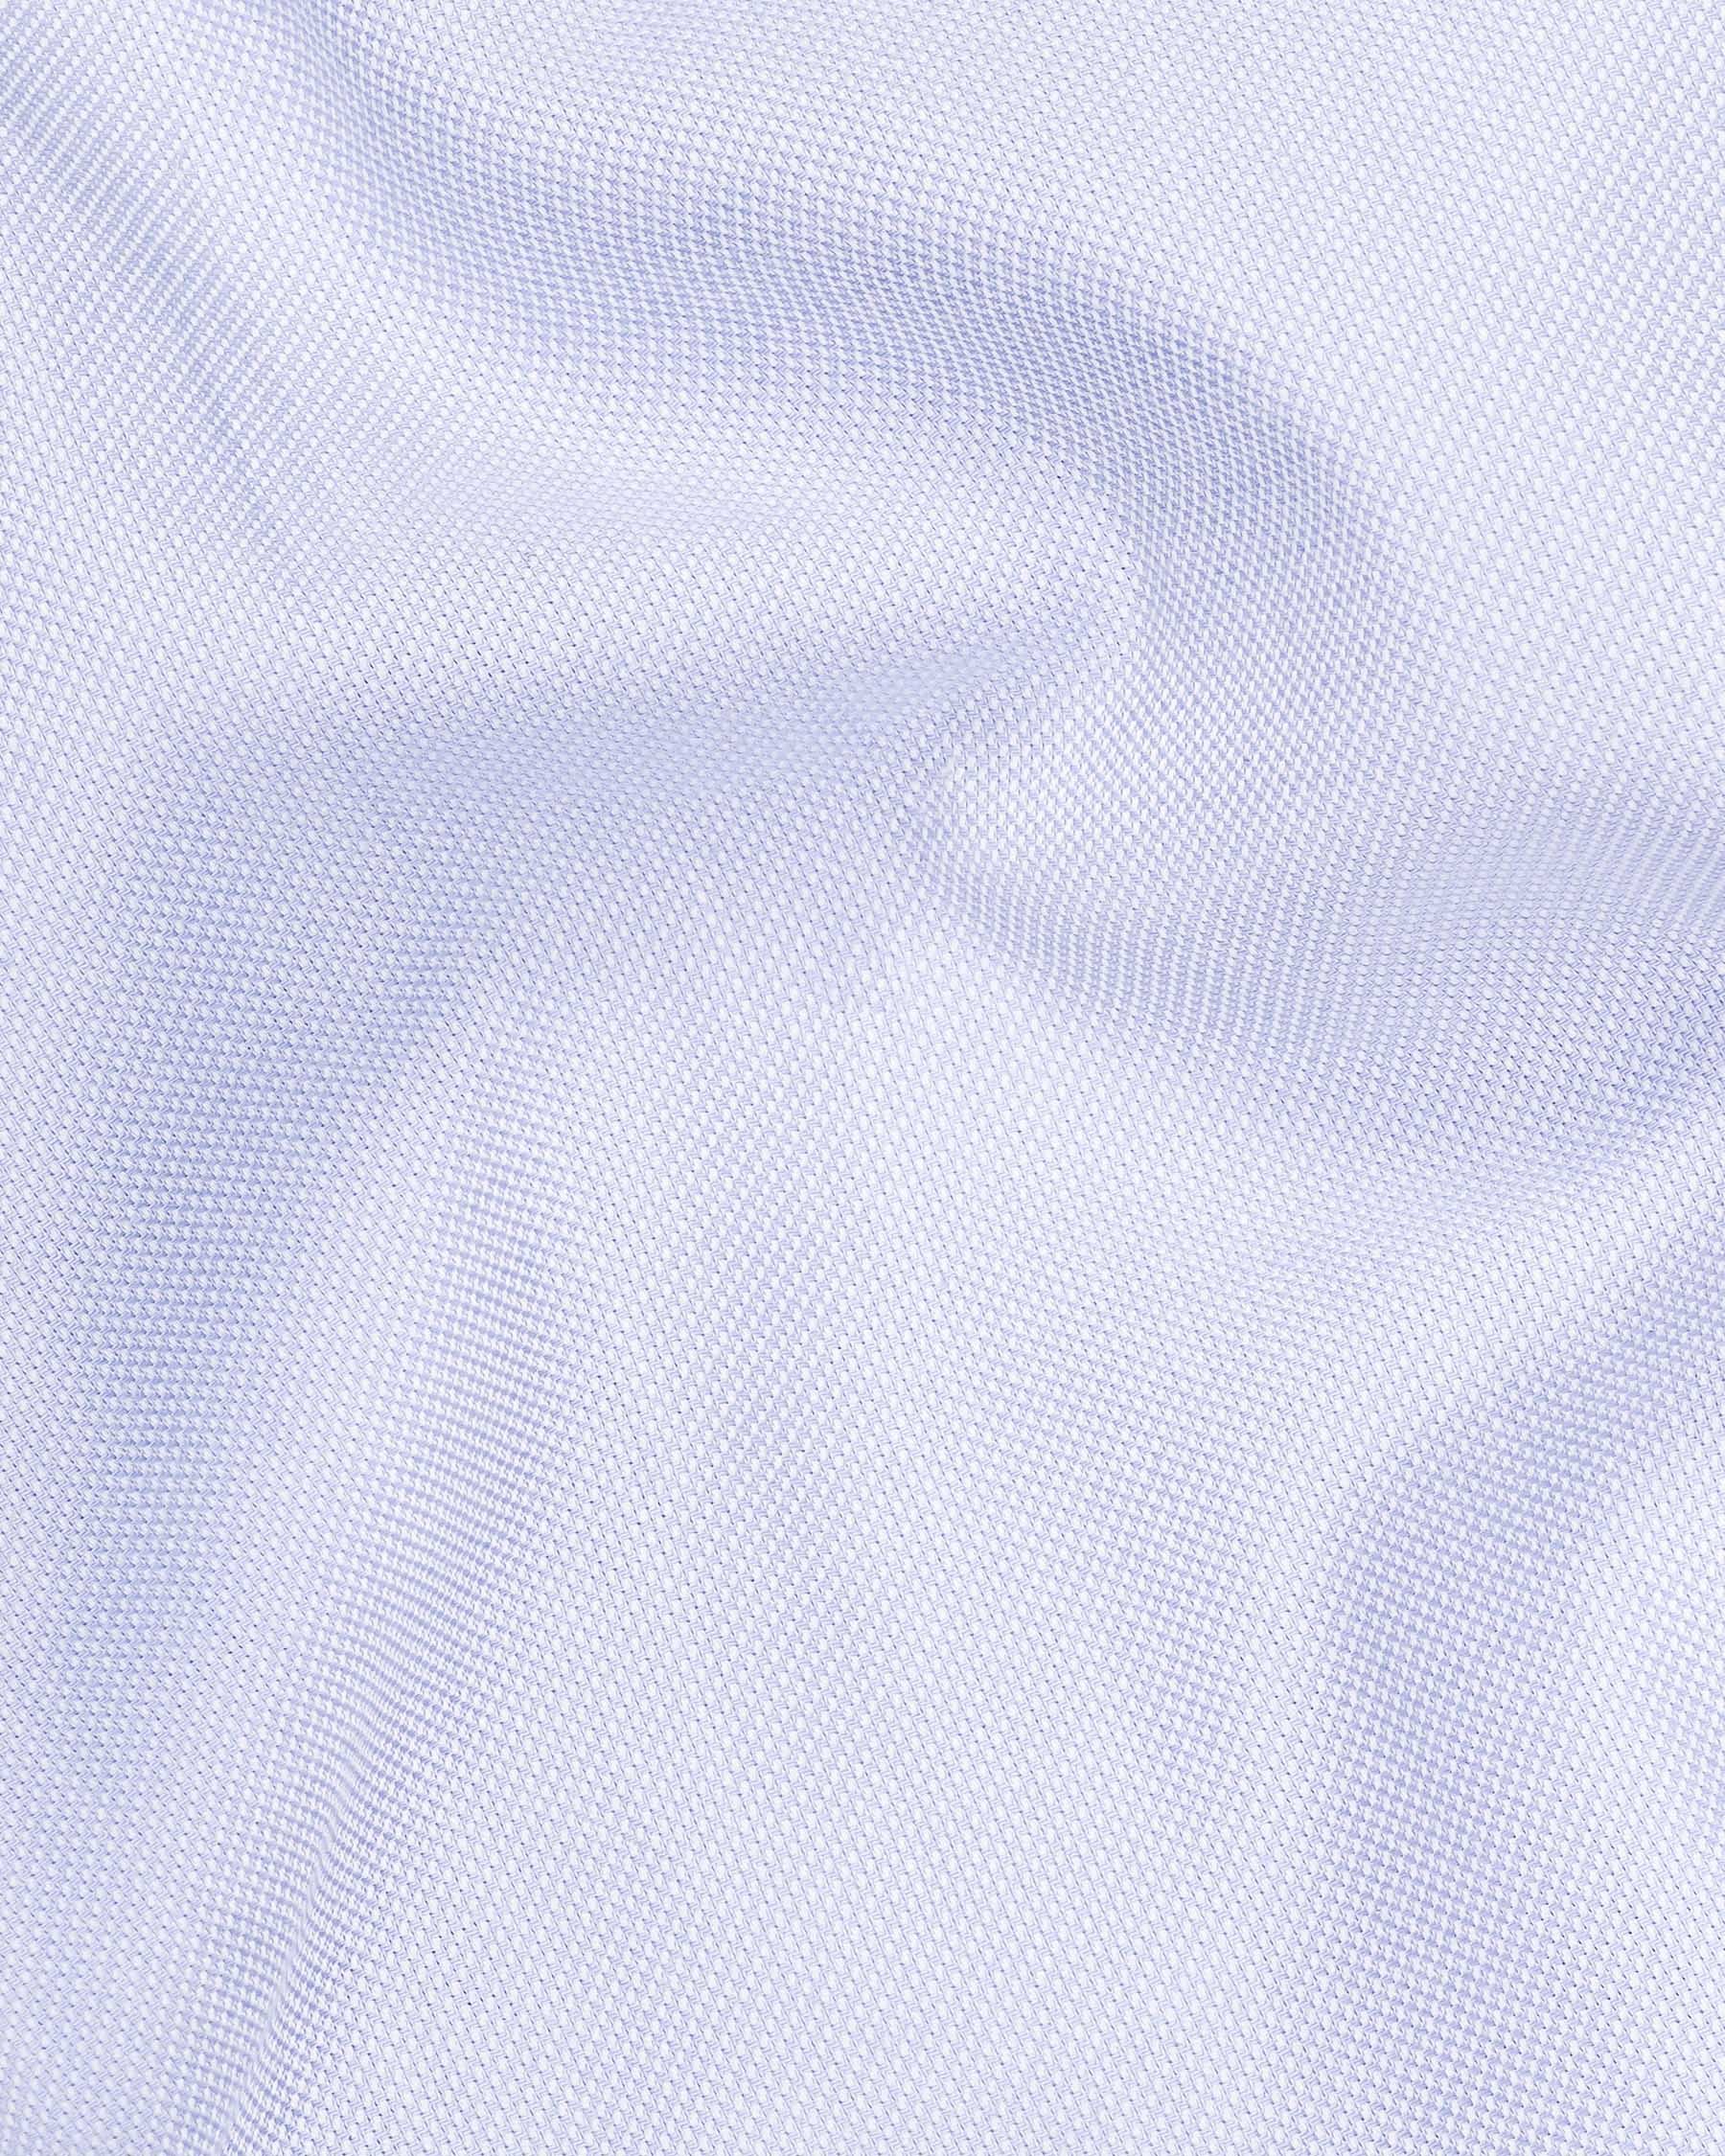 Link Water Blue Dobby Premium Giza Cotton Checkered Shorts SR168-28, SR168-30, SR168-32, SR168-34, SR168-36, SR168-38, SR168-40, SR168-42, SR168-44